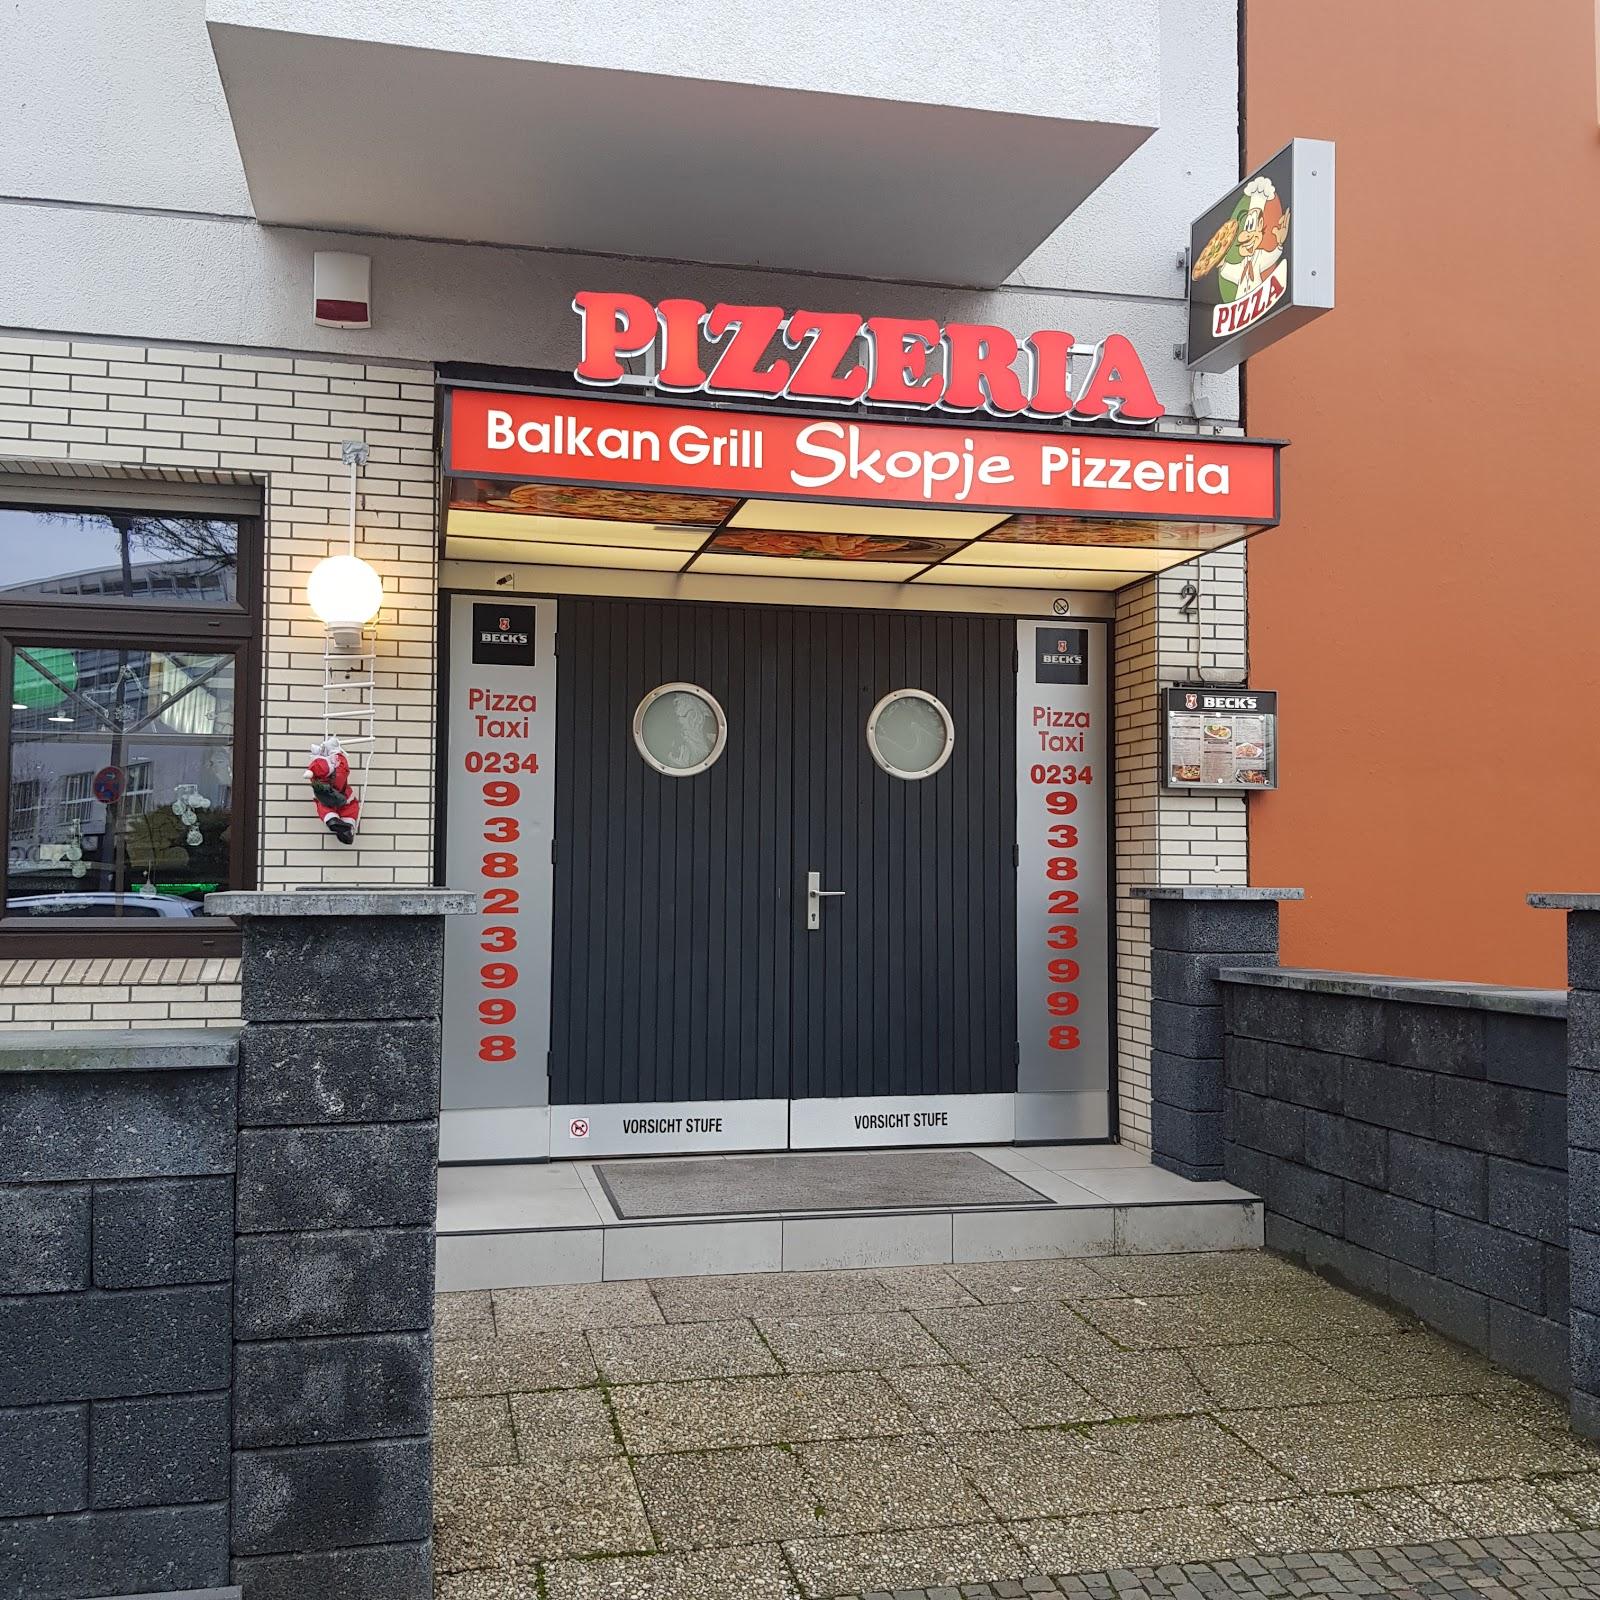 Restaurant "Balkan Grill Pizzeria Skopje" in Bochum